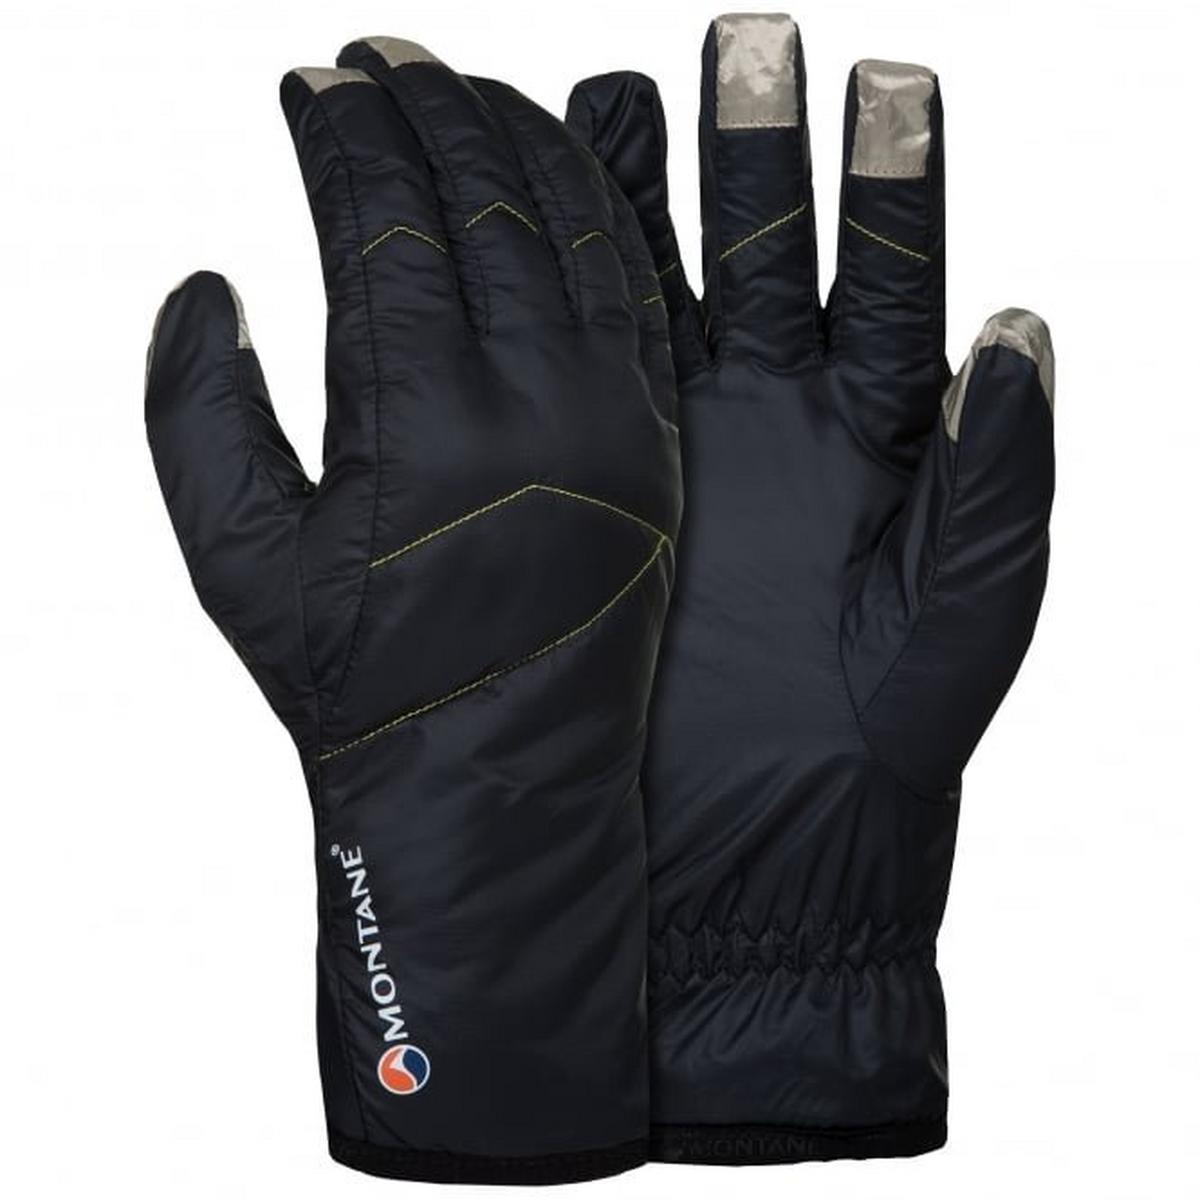 Montane Men's Insulated Prism Glove - Black/Kiwi